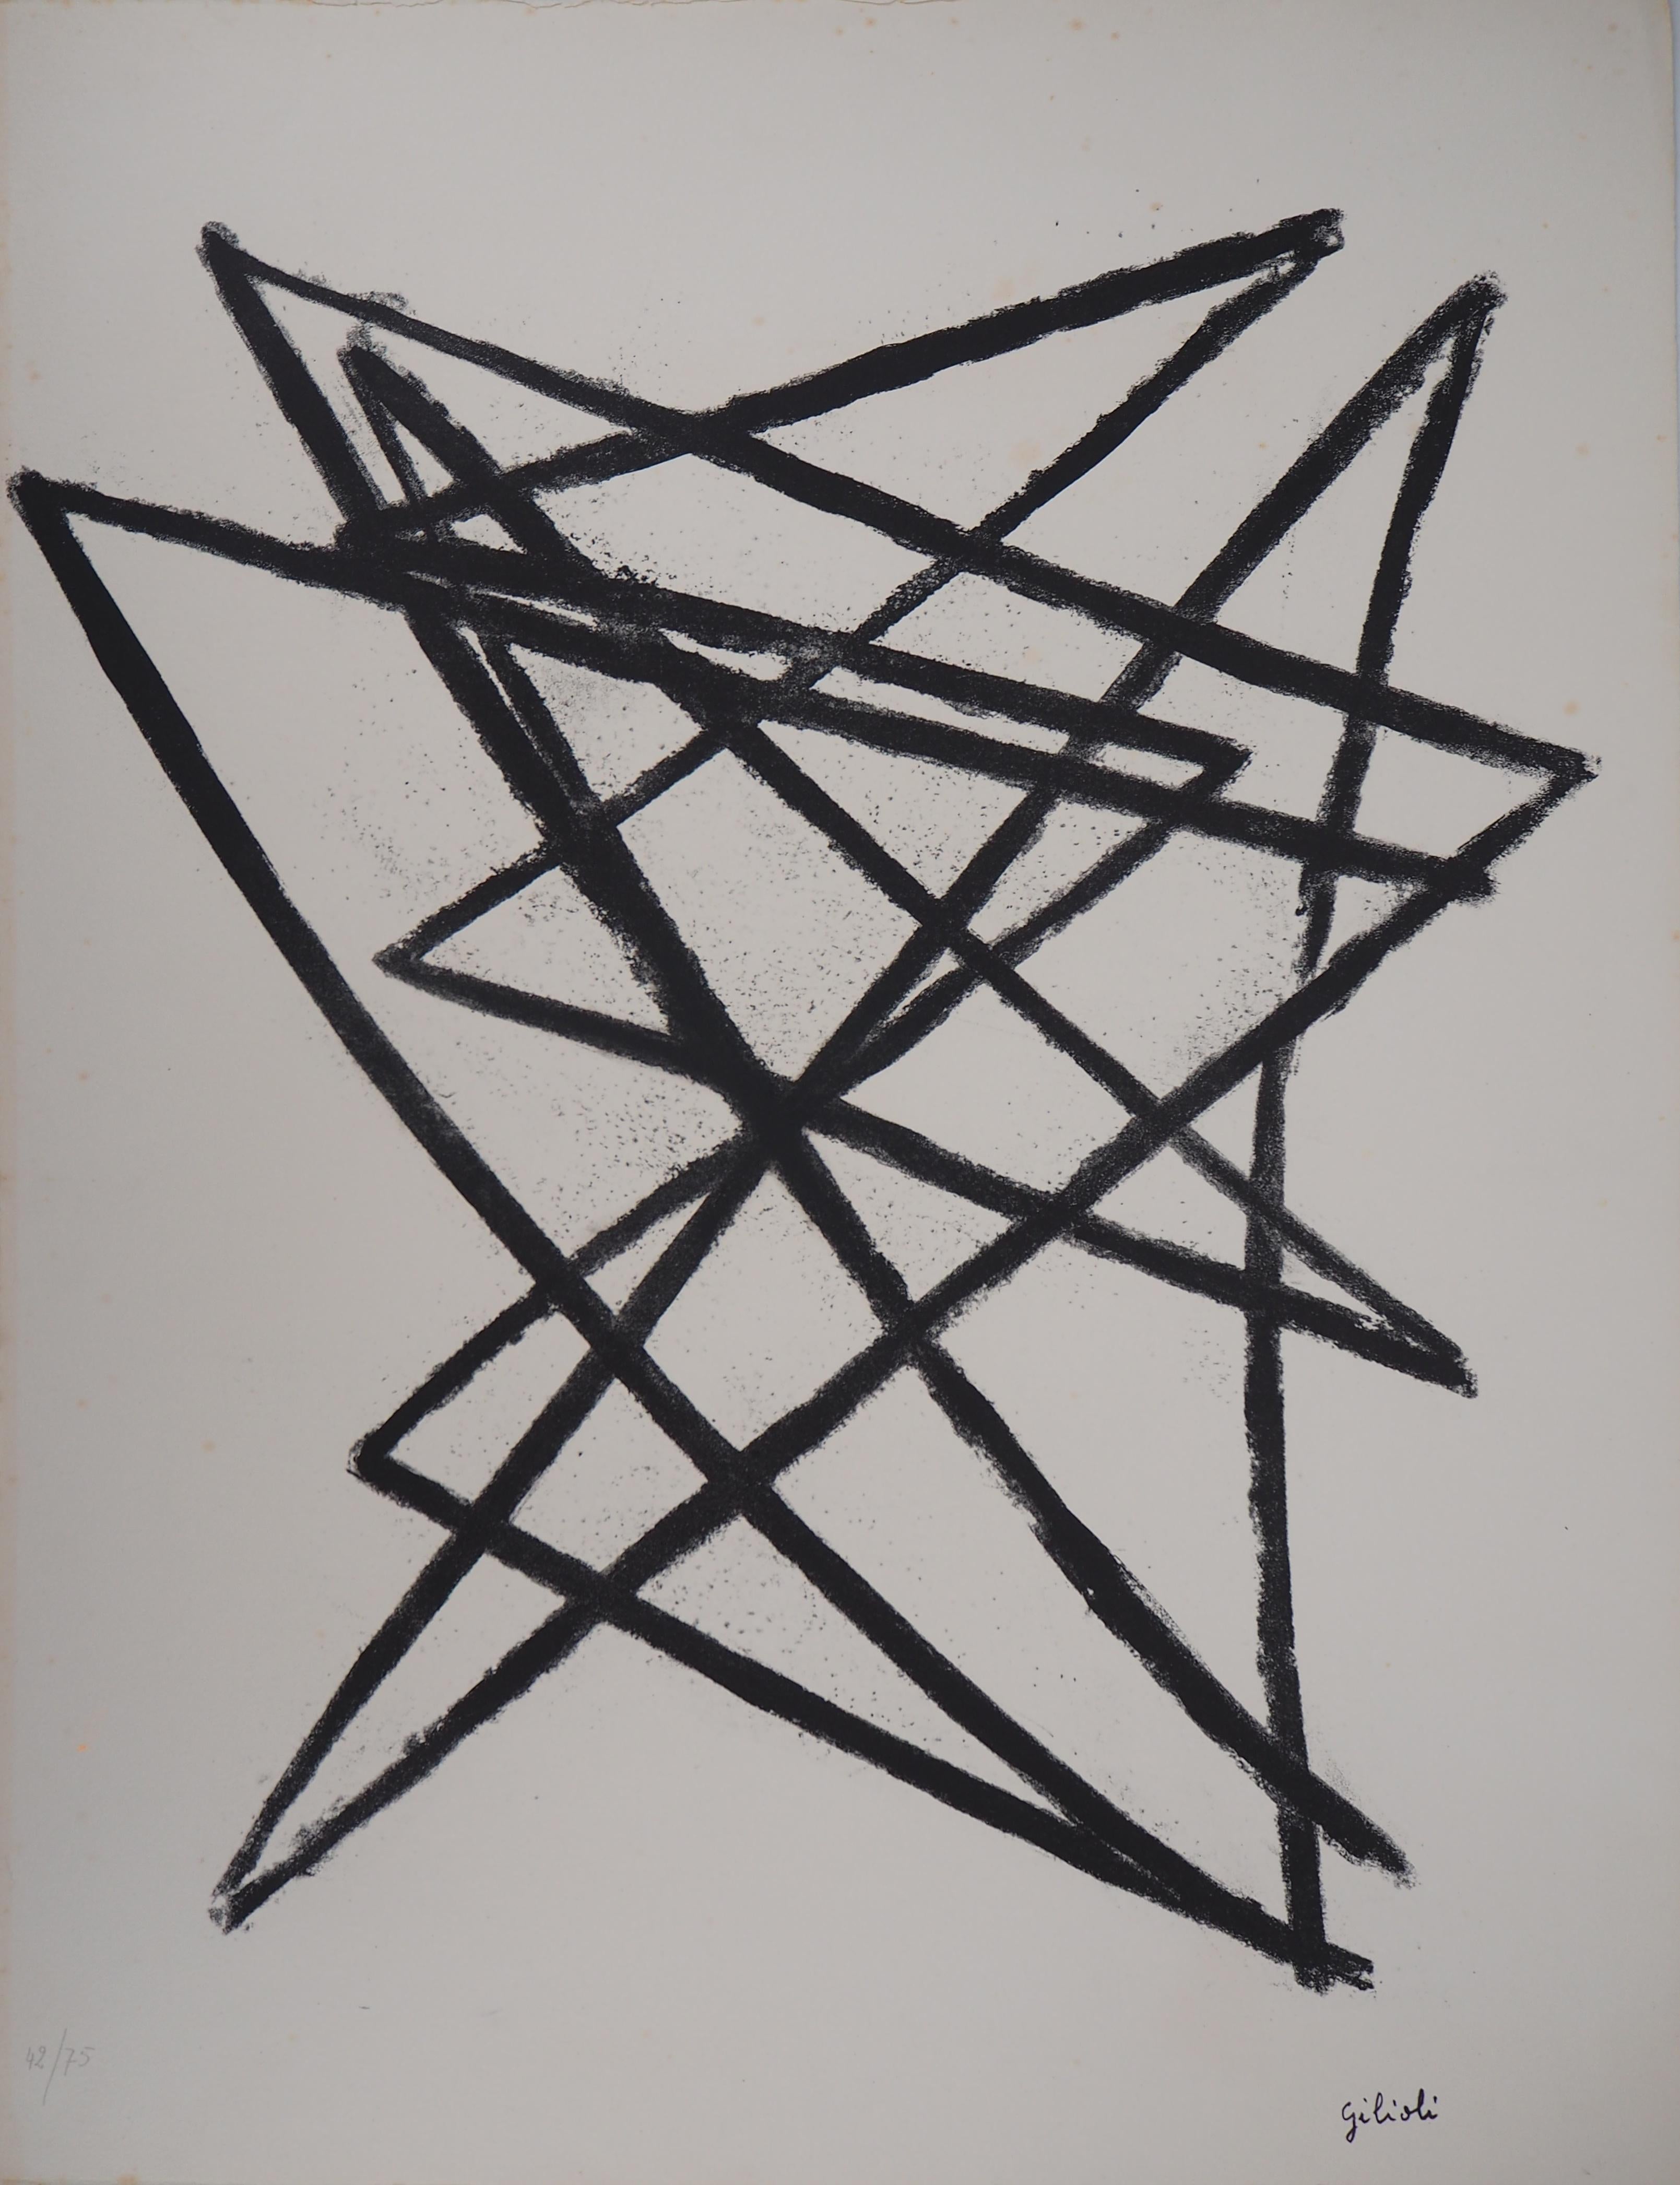 Émile Gilioli Abstract Print - Broken Lines - Original Lithograph, Handsigned